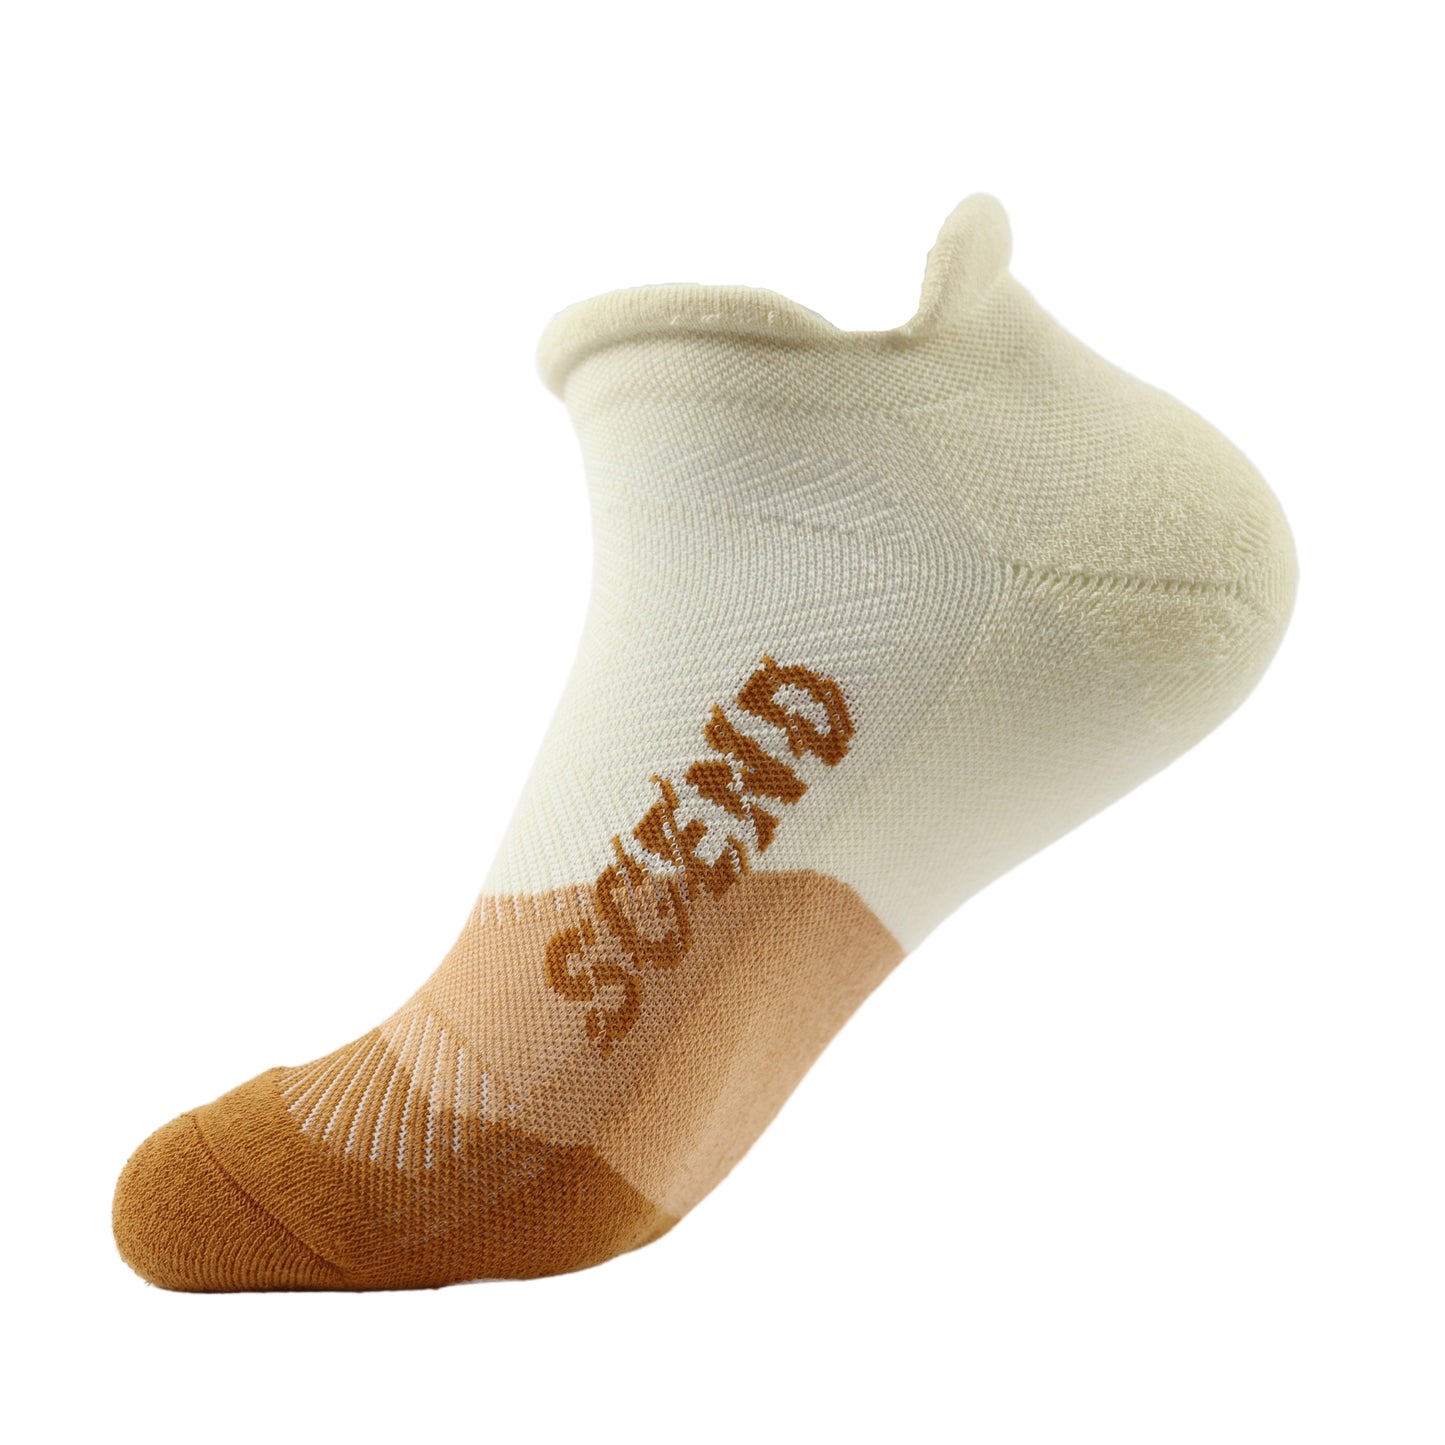 Tan cushion sport socks | Pack of 6